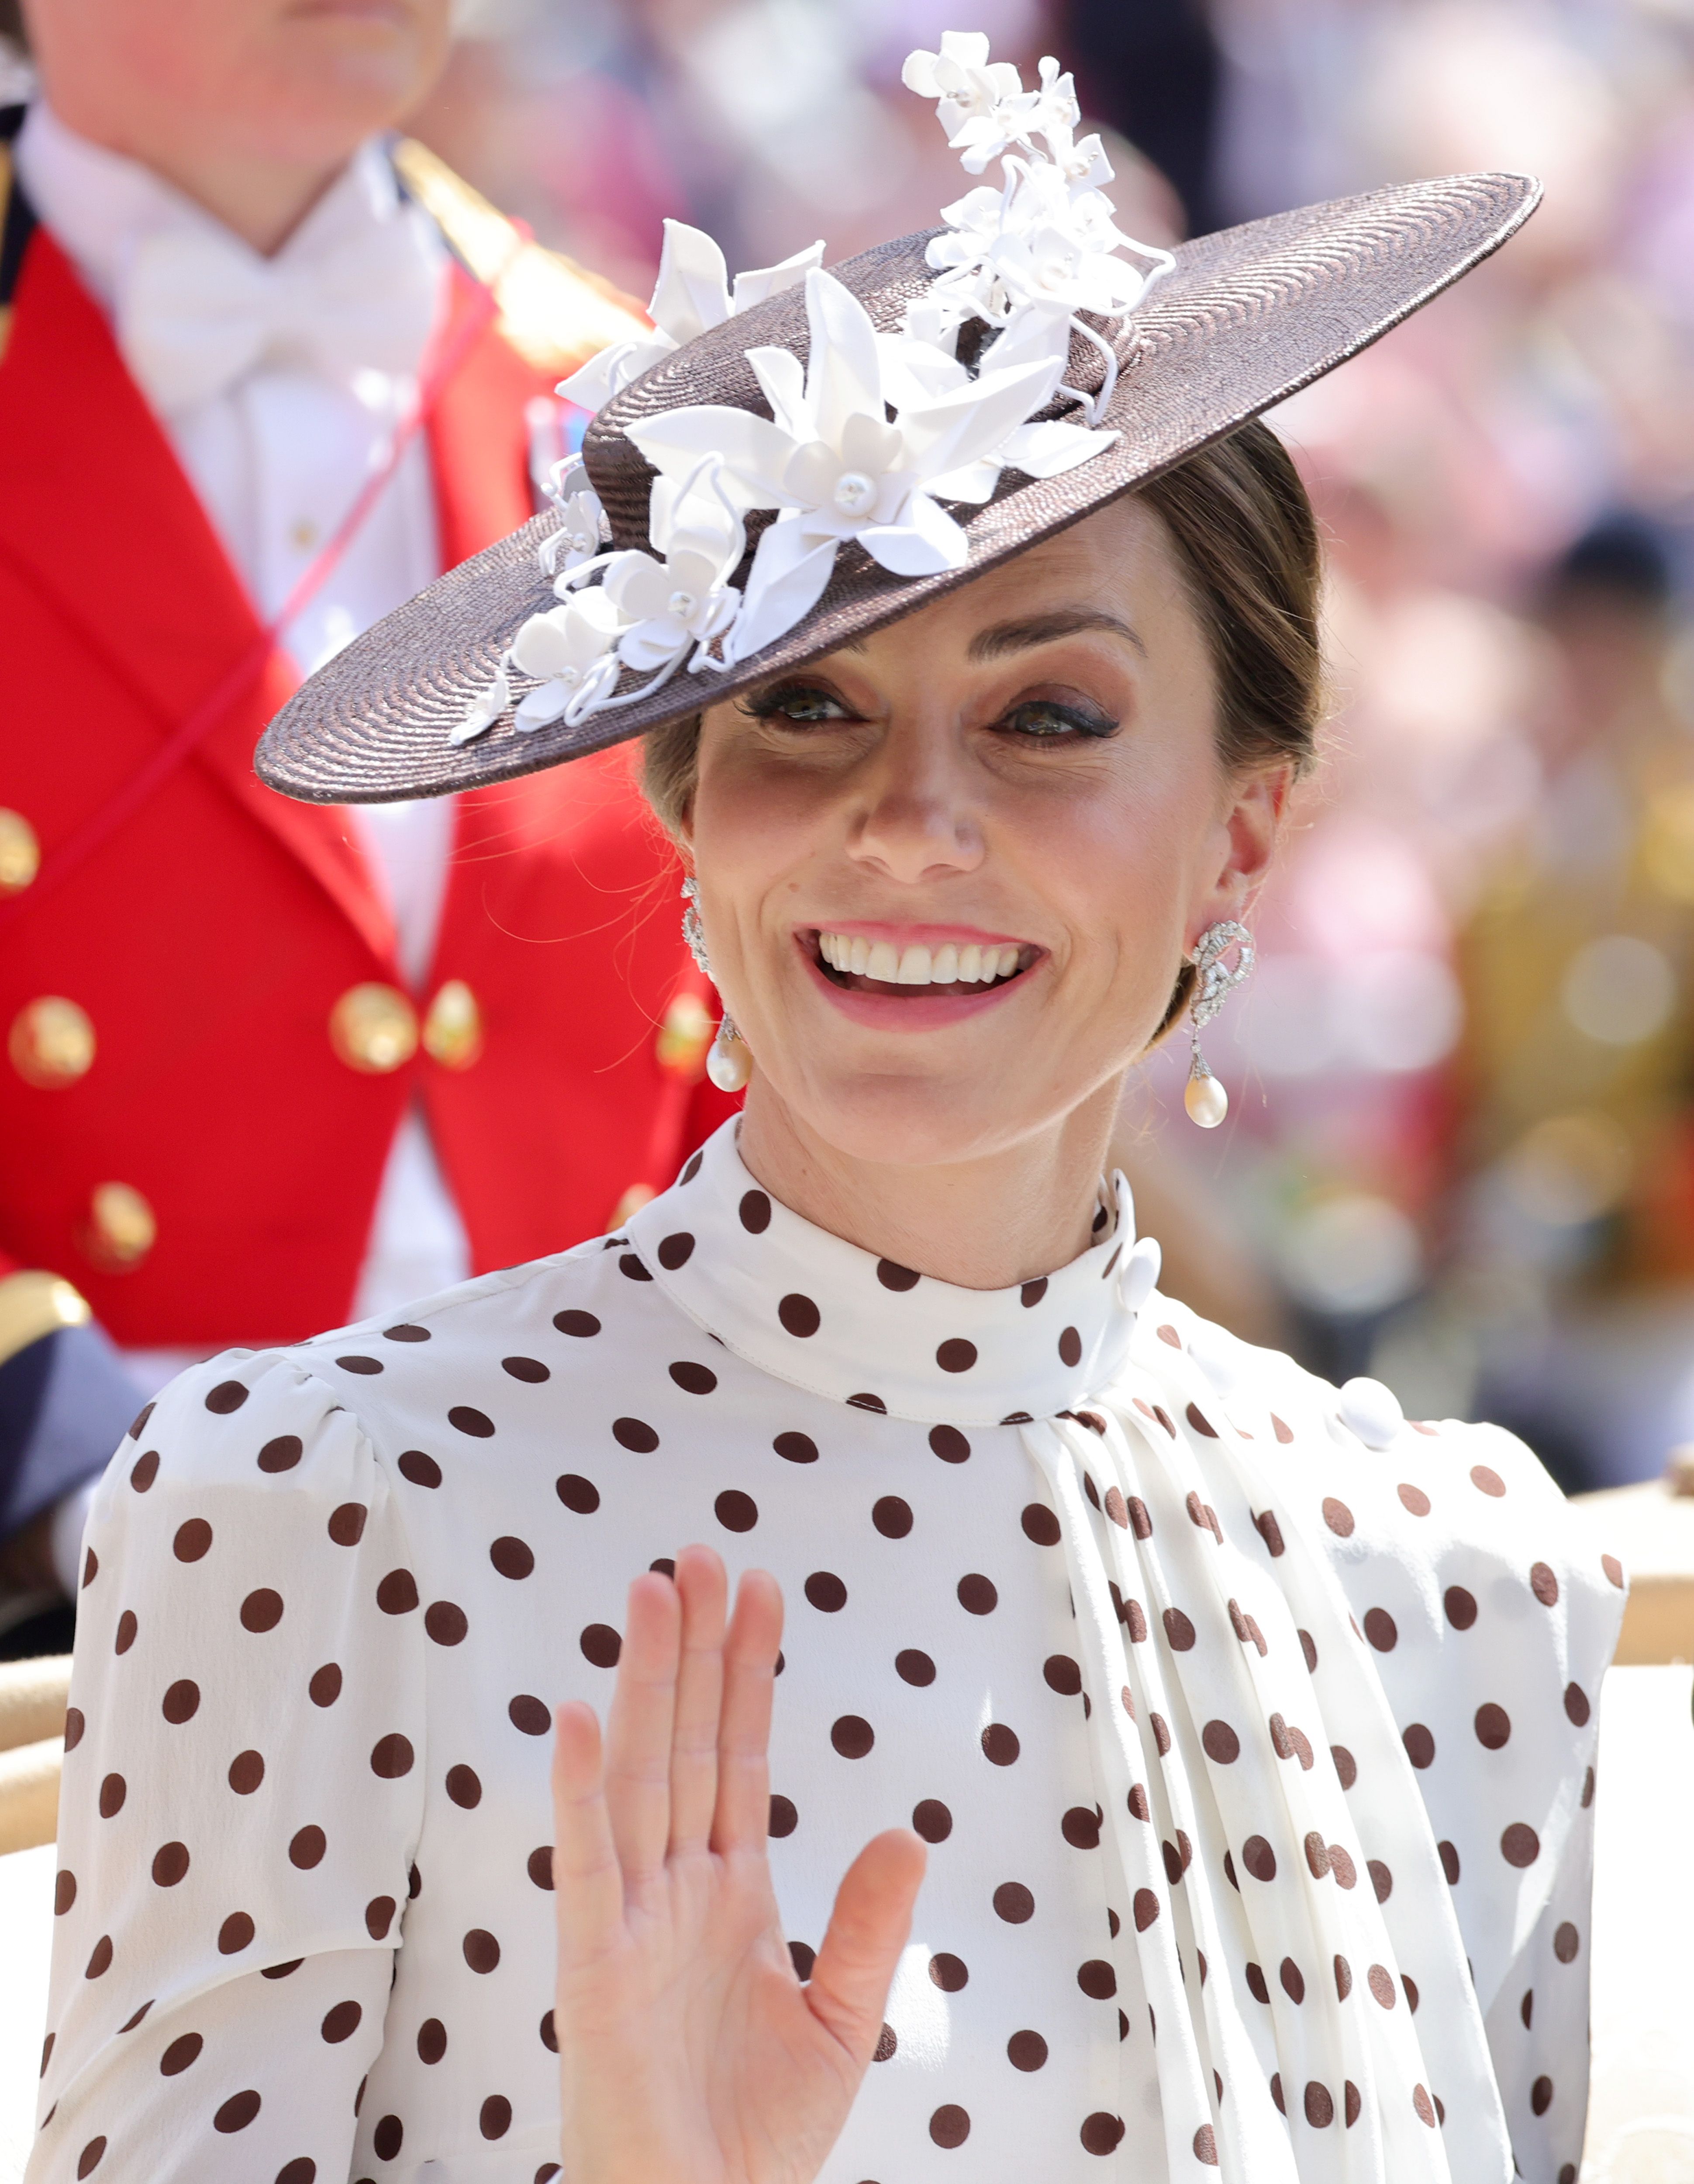 Kate Middleton Looks Glamorous In A Polka Dot Dress At The Royal Ascot